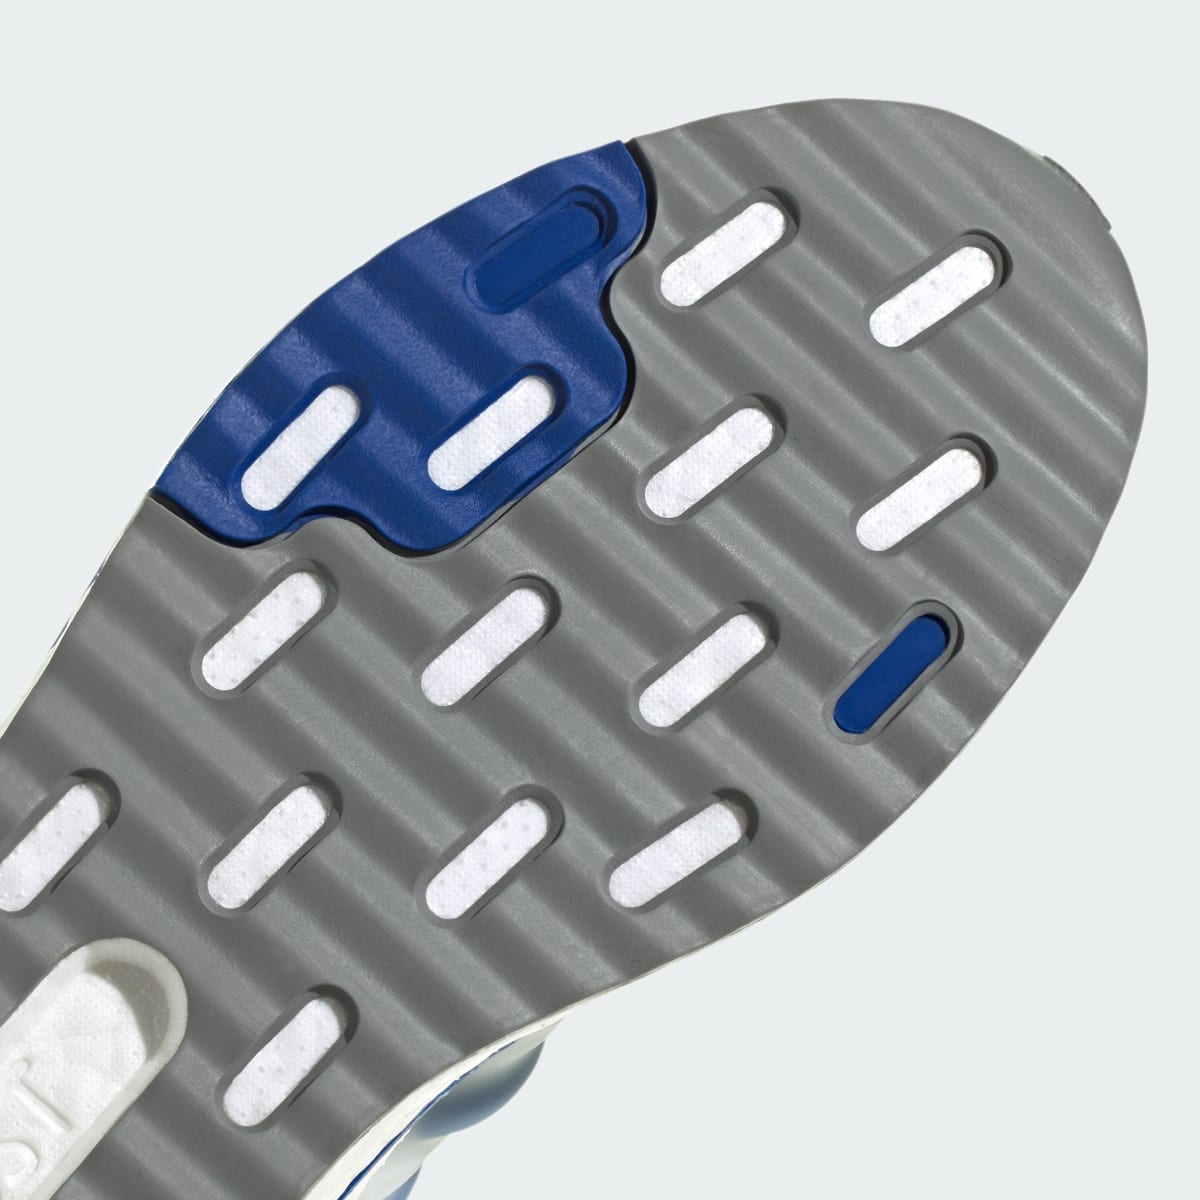 Adidas X_PLRBOOST Ayakkabı. 10